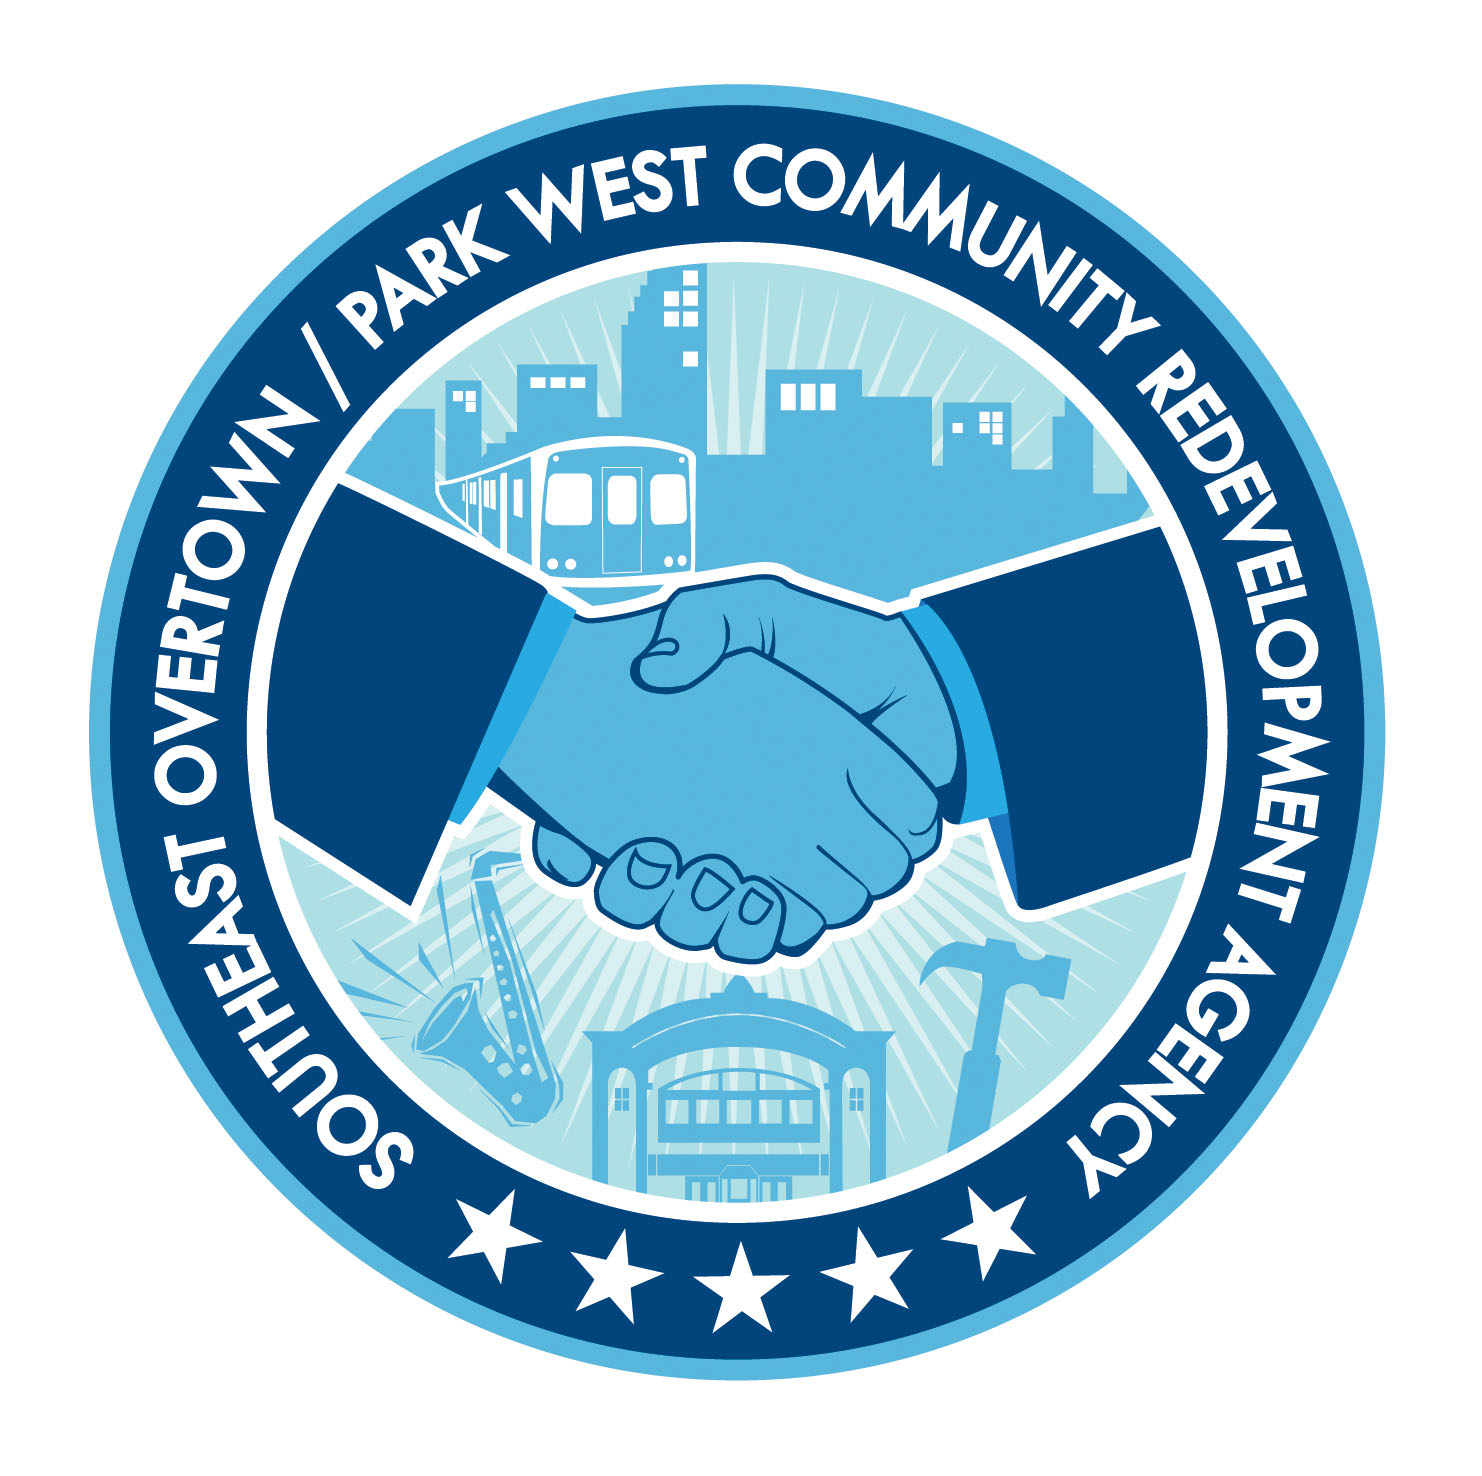 SOUTHEAST OVERTOWN - PARK WEST COMMUNITY REDEVELOPMENT AGENCY - logo (1).jpg